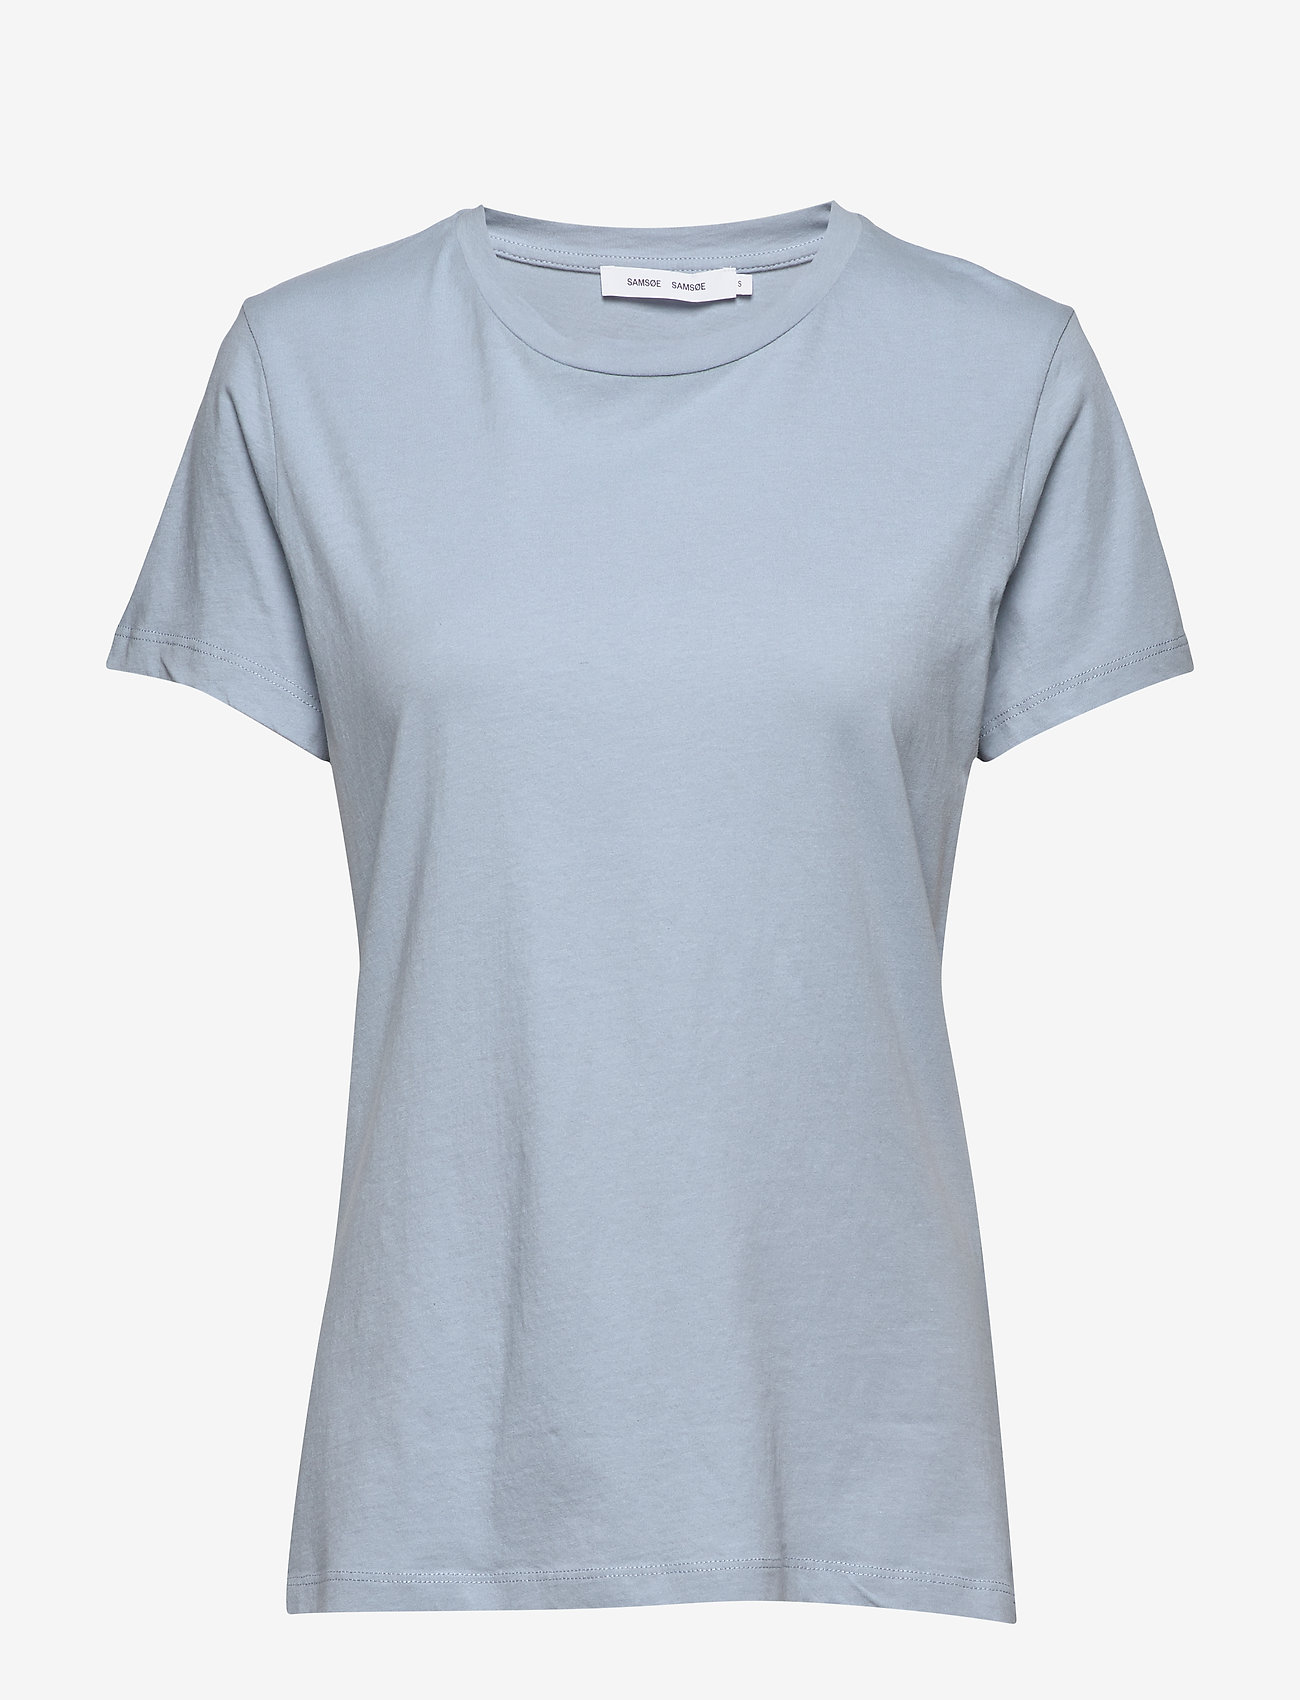 Samsøe Samsøe - Solly tee solid 205 - t-shirt & tops - dusty blue - 0